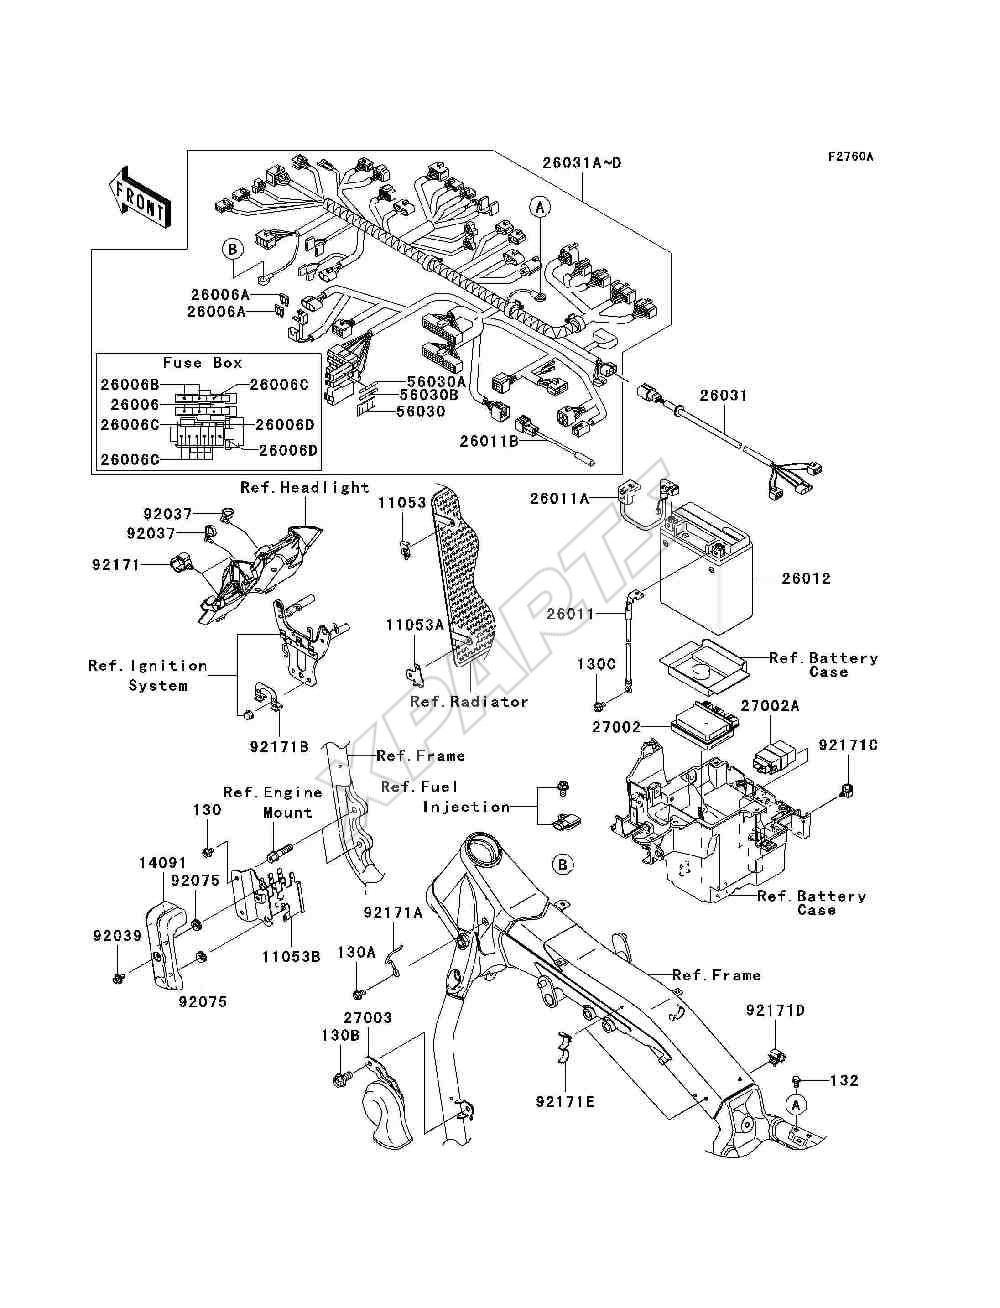 Bild für Kategorie Chassis Electrical Equipment(A2)